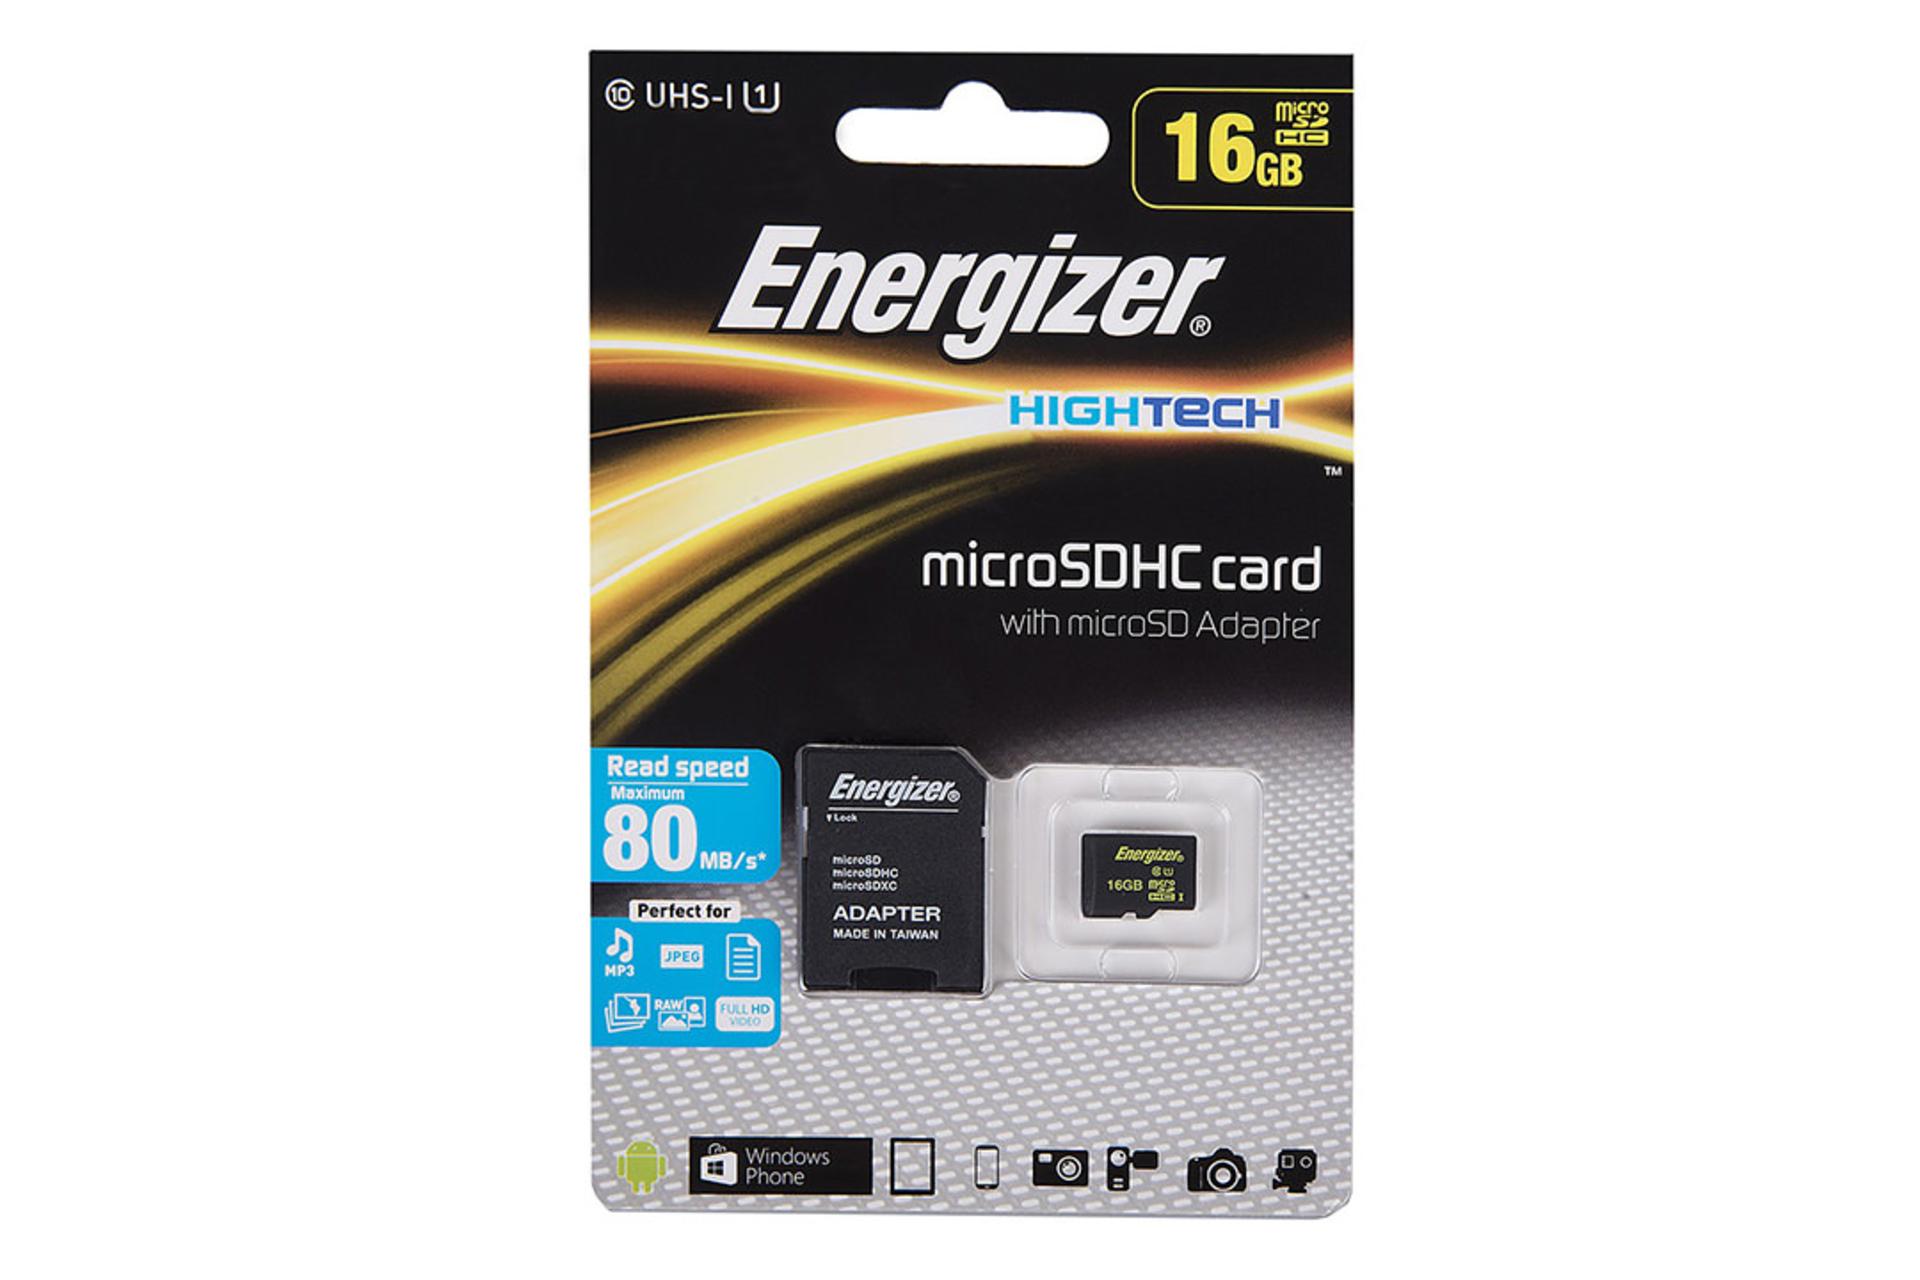 Energizer Hightech microSDHC Class 10 UHS-I U1 16GB